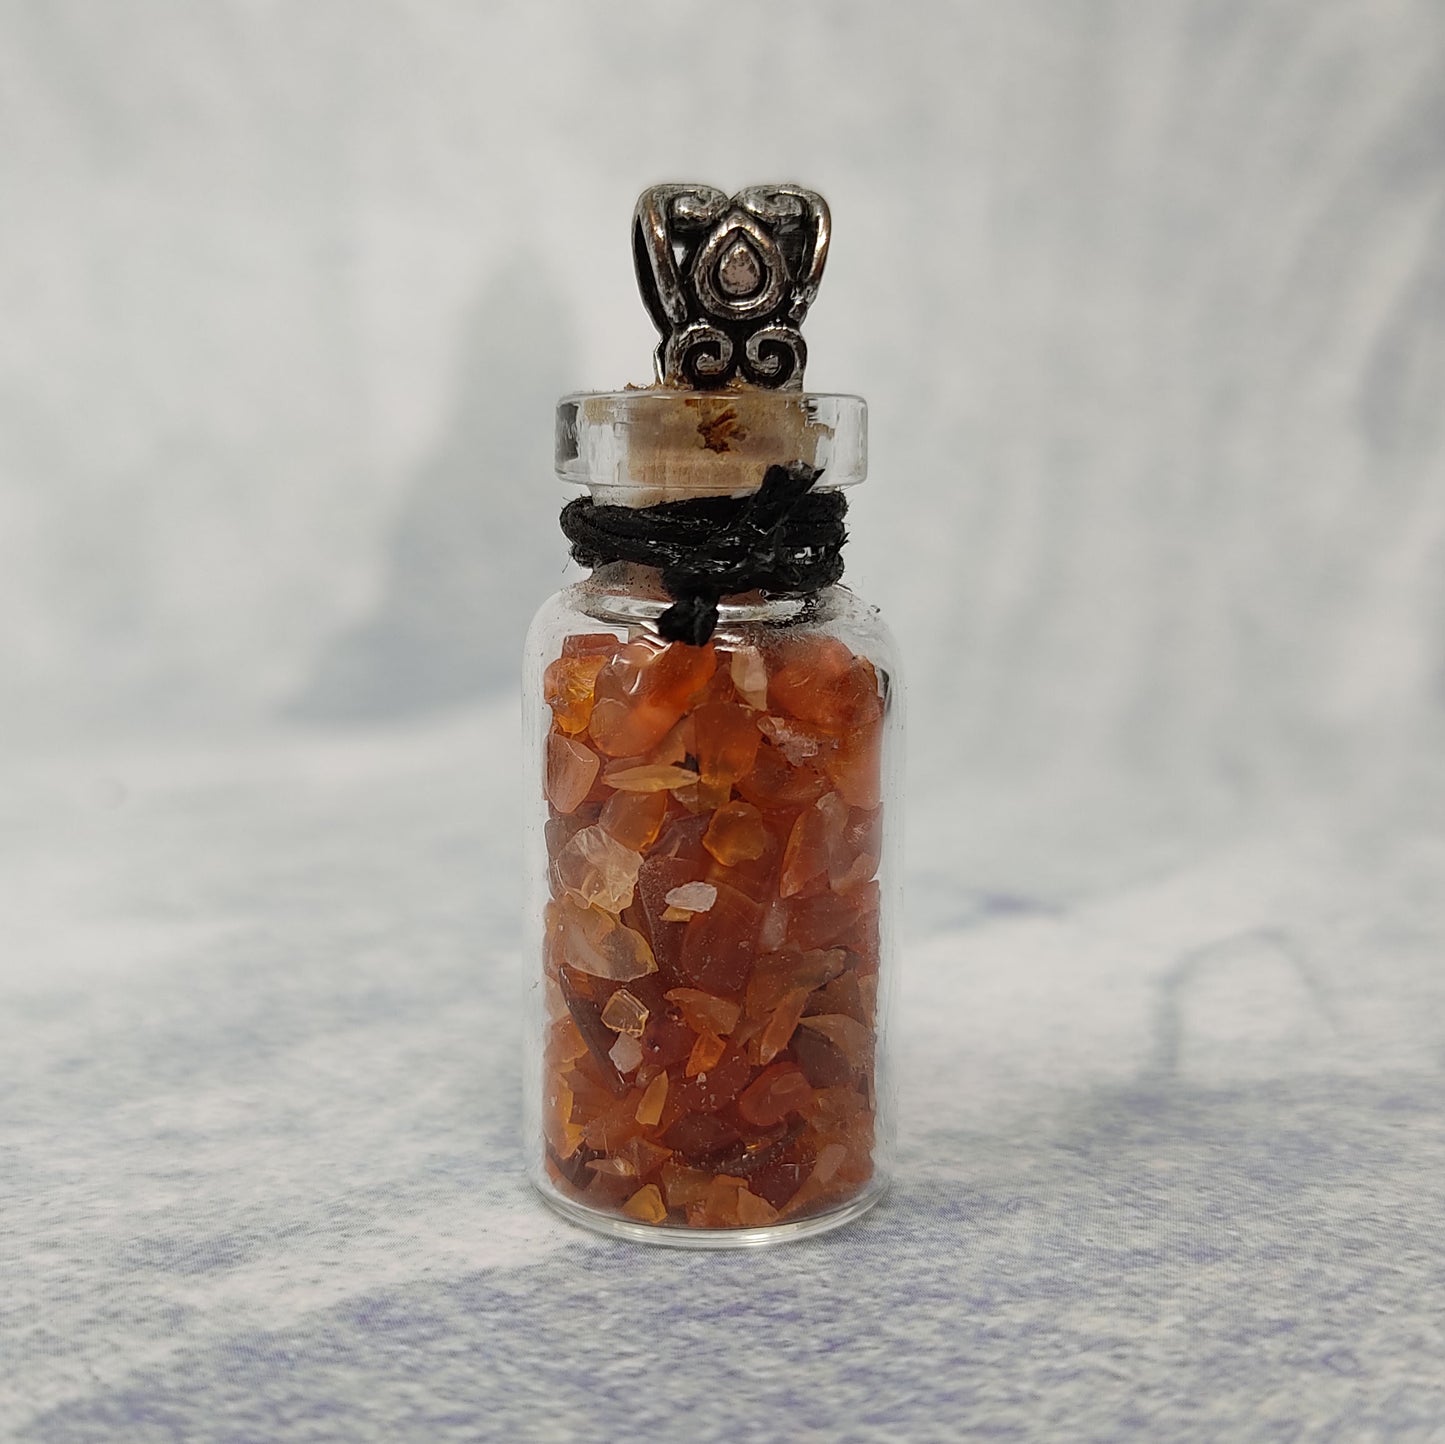 Carnelian Jewlery Gift Set Carnelian Chip Stretch Bracelet - Carnelian Chip Stone Bottle Necklace